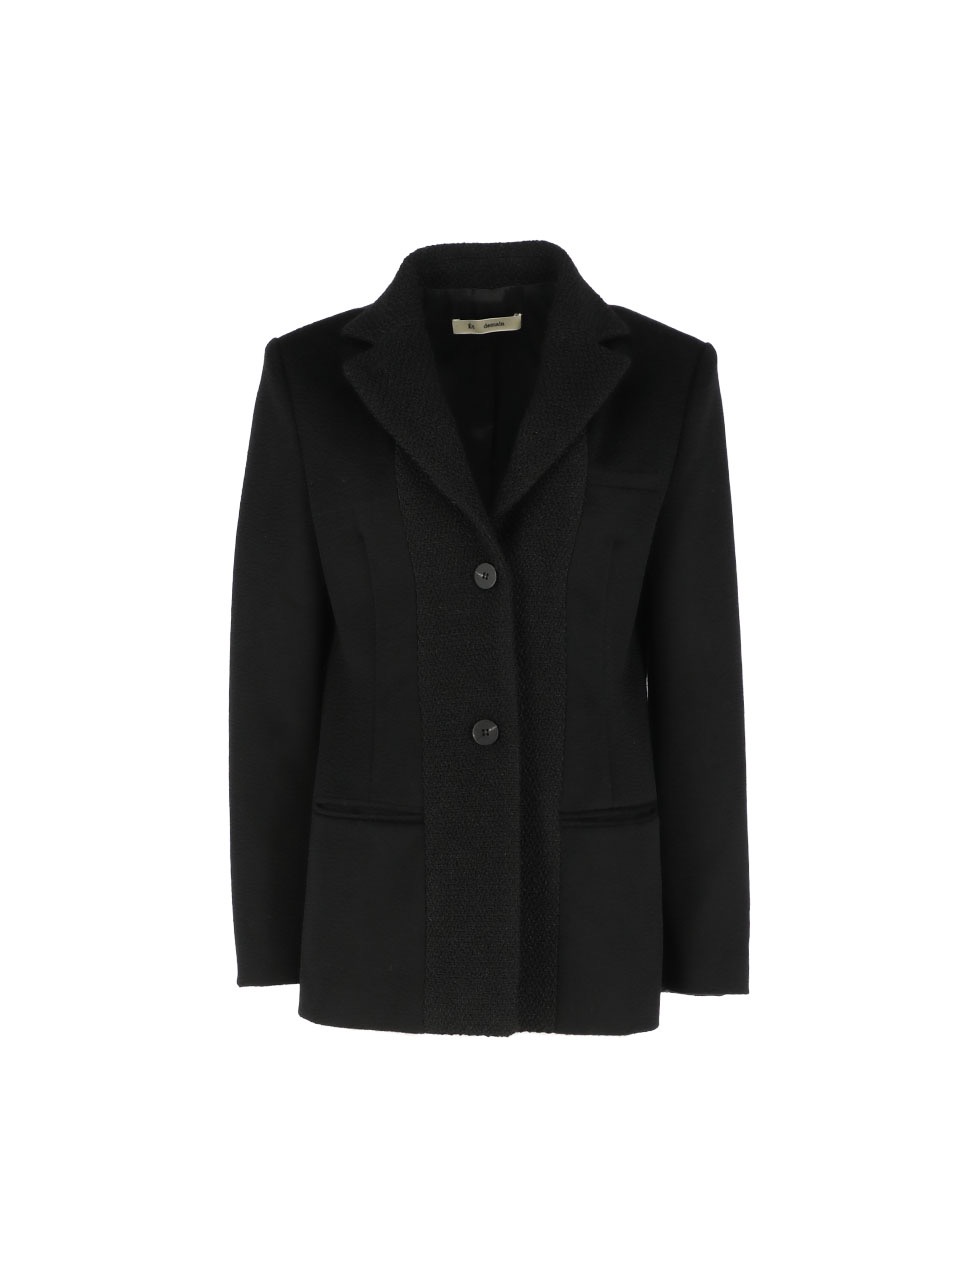 [Fabric from ITALY] Mixed-bouclé wool black jacket (Black)